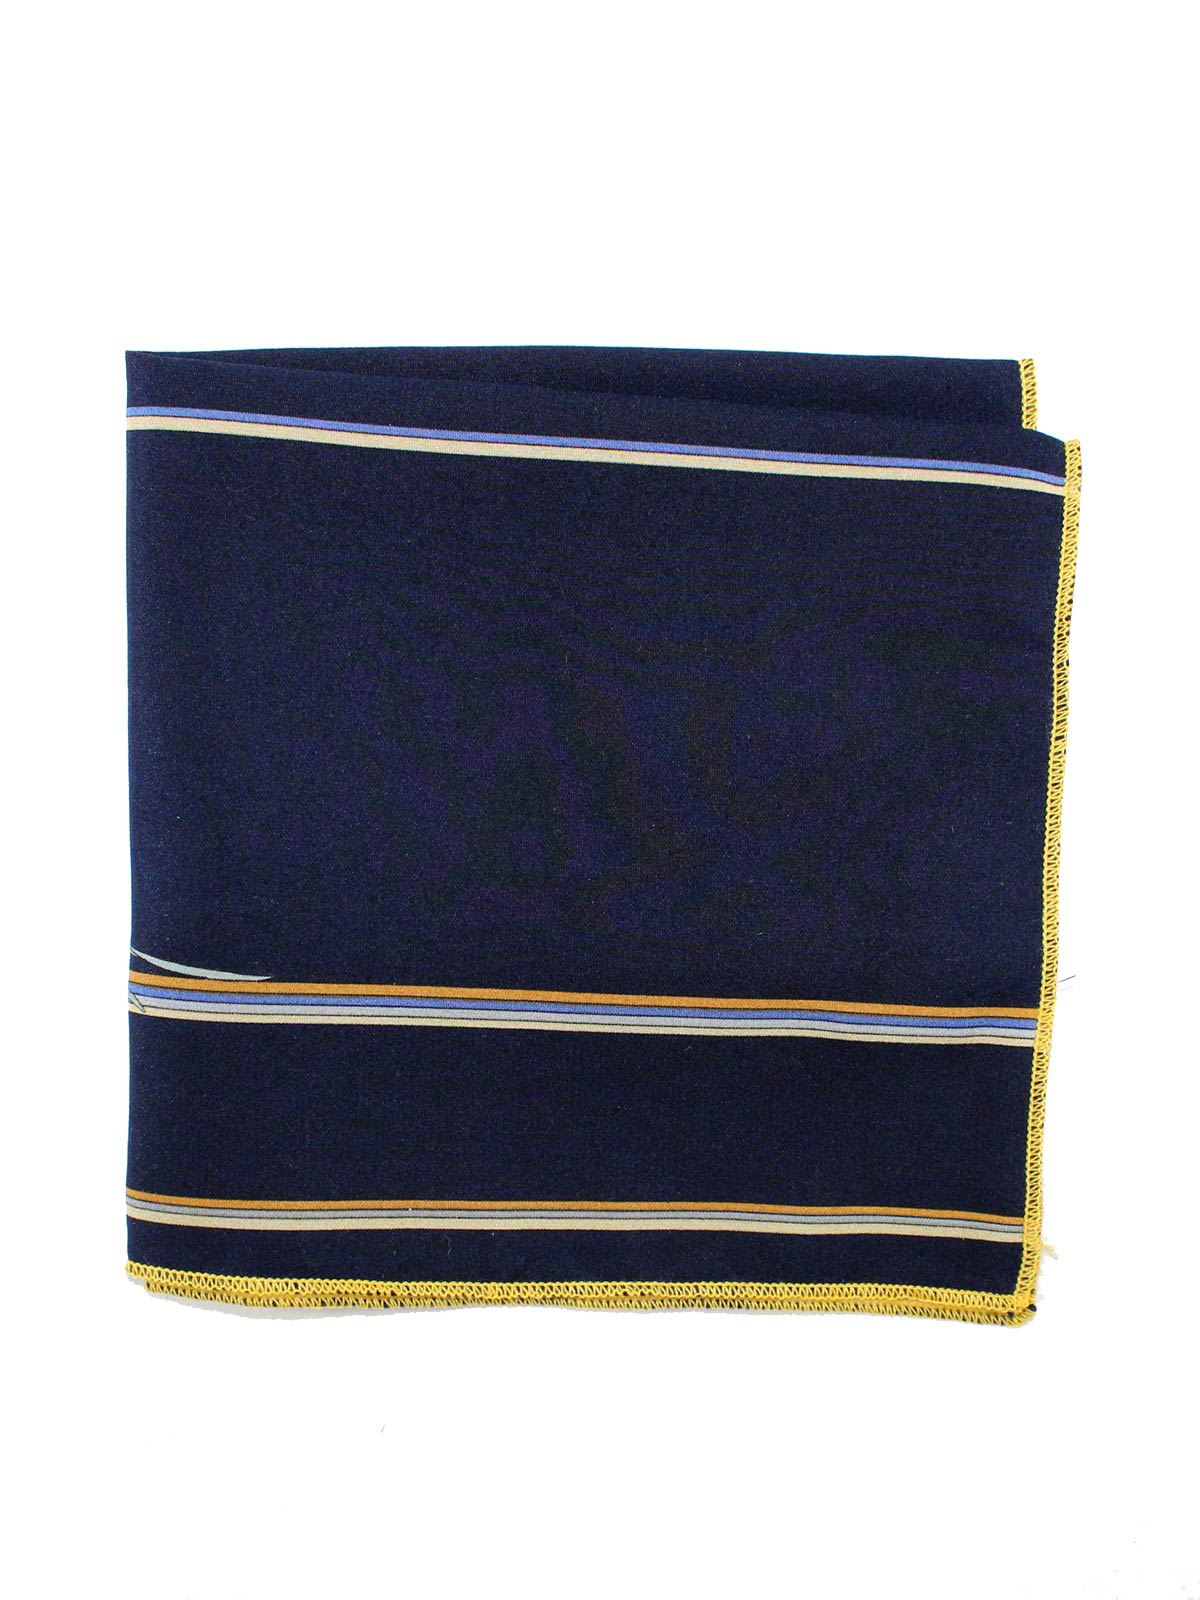 Leonard Silk Pocket Square Dark Blue Gray Brown Stripes Vintage FINAL SALE